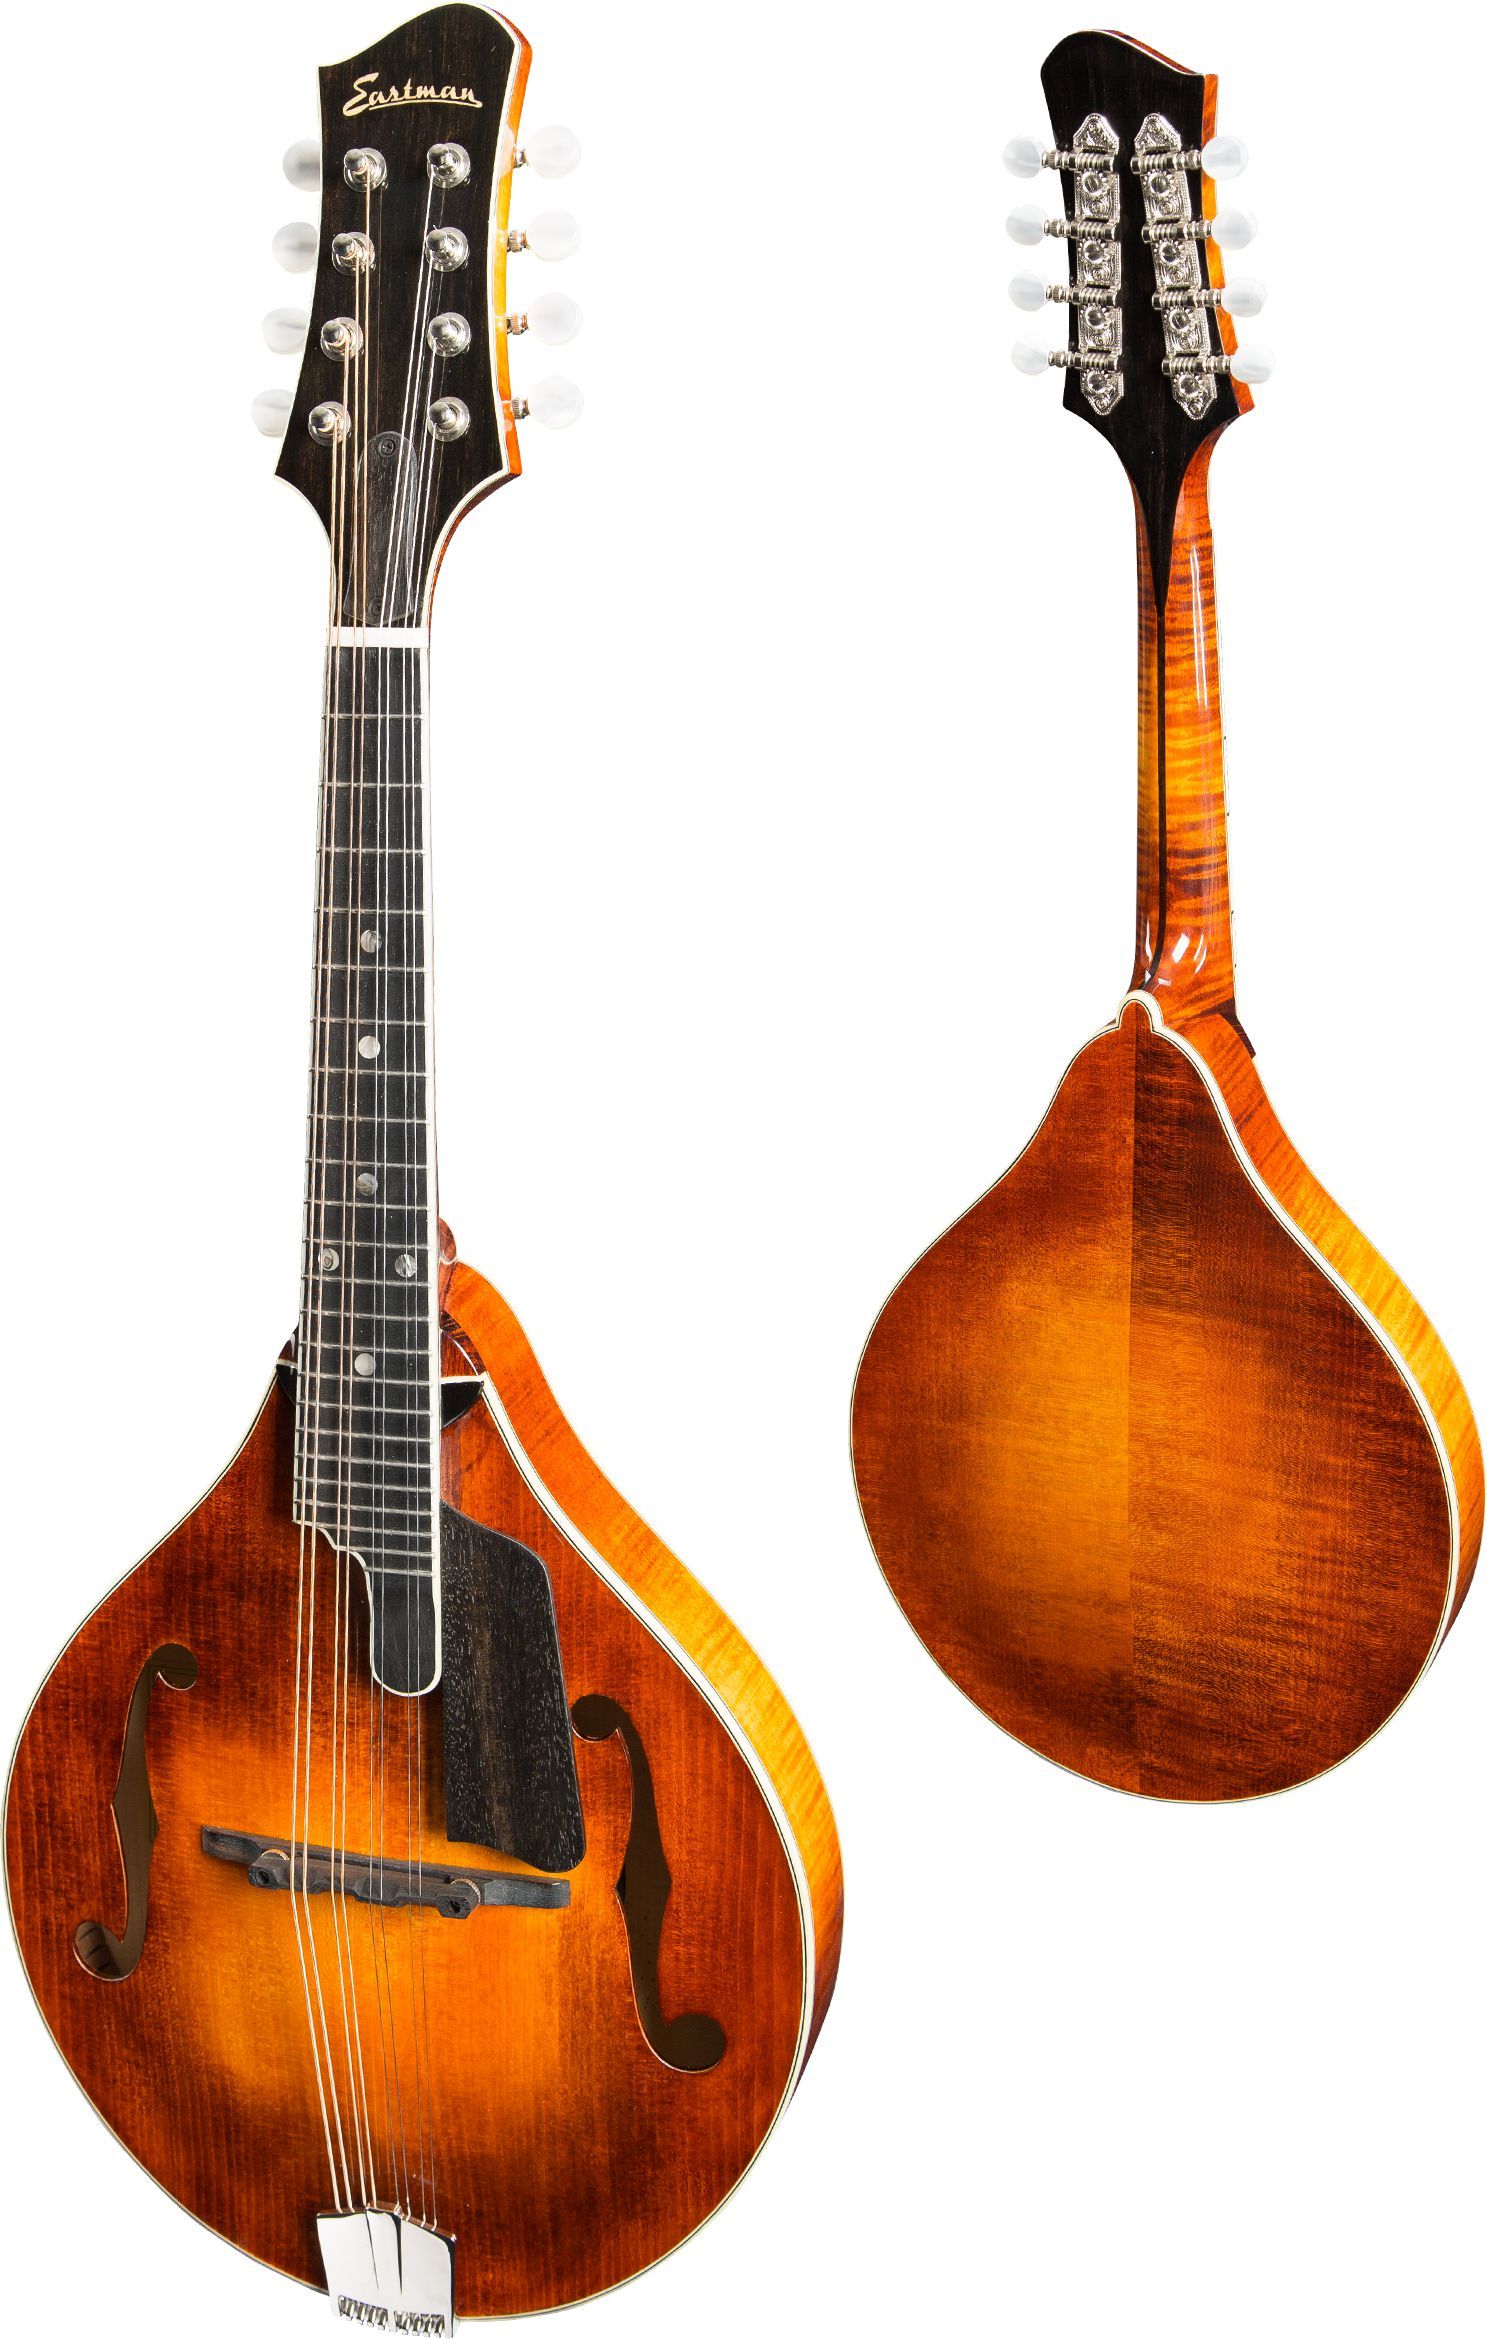 Eastman MD805PGE Same specs as MD805 Mandolin (but Honeyburst Gloss nitro finish and KnK twin mandolin pu, w/Case), Mandolin for sale at Richards Guitars.